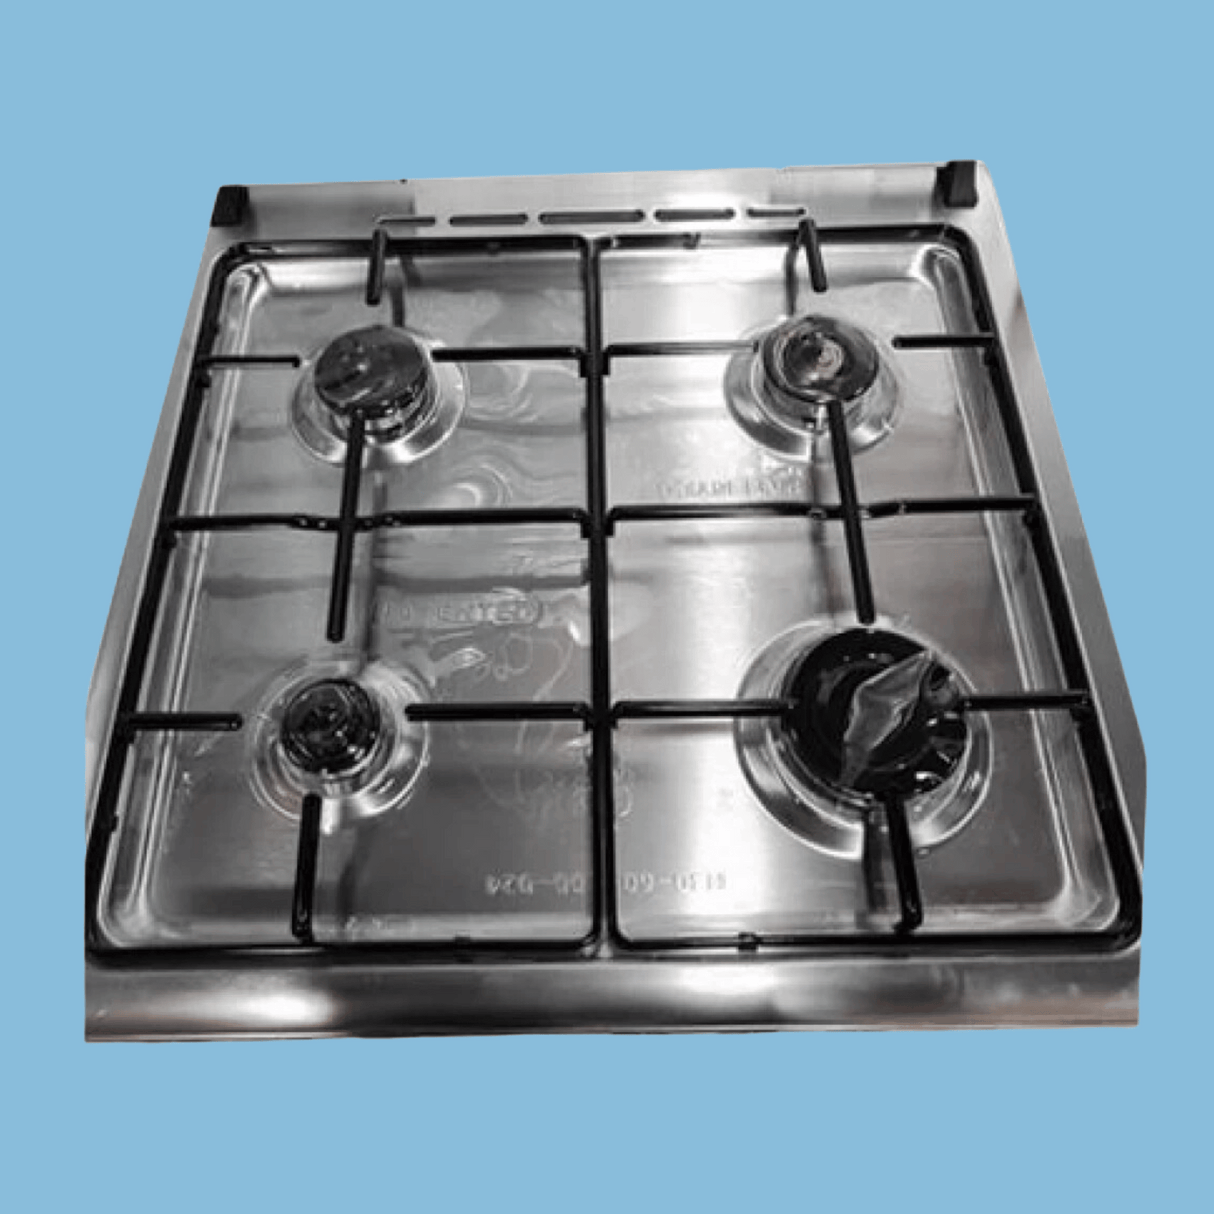 Titan 60x60cm Free Standing Full Gas Cooker, 4 Gas Burners, Gas Oven & Grill – TN-FC6400XA – Silver